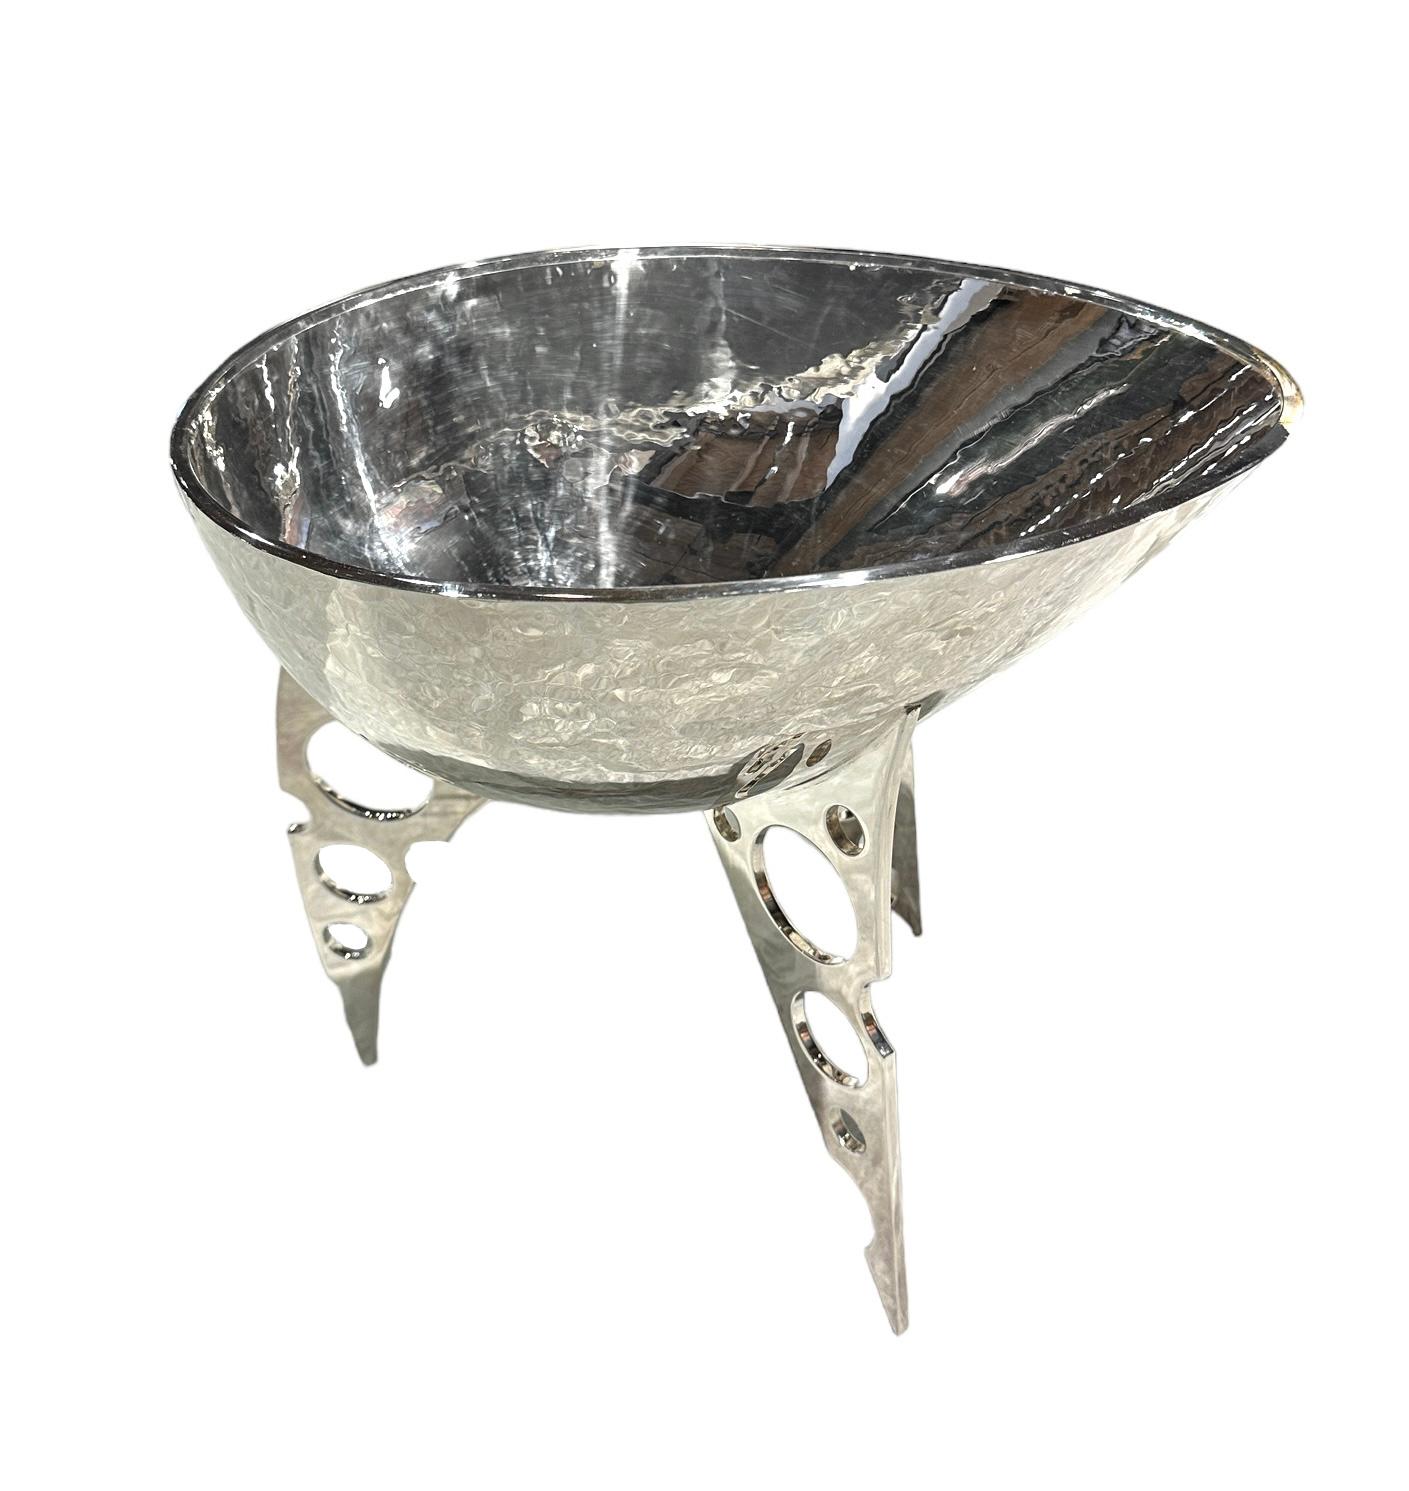 Polished Silver Vessel, Fruit Bowl Sculptural Object by Raju Peddada - 